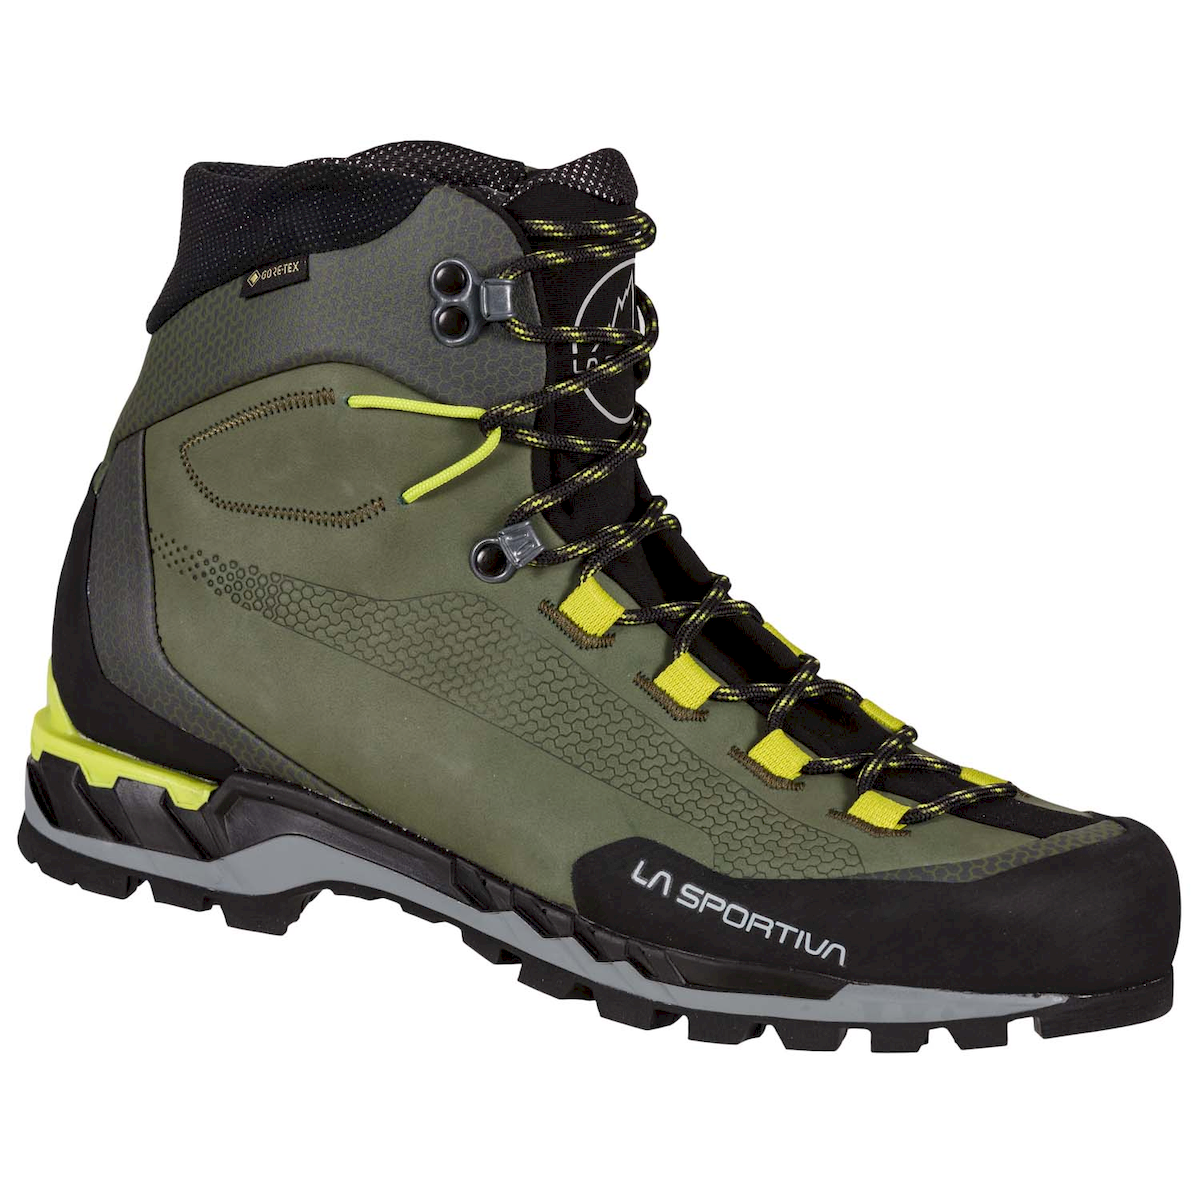 La Sportiva Trango Tech Leather GTX - Hiking boots - Men's